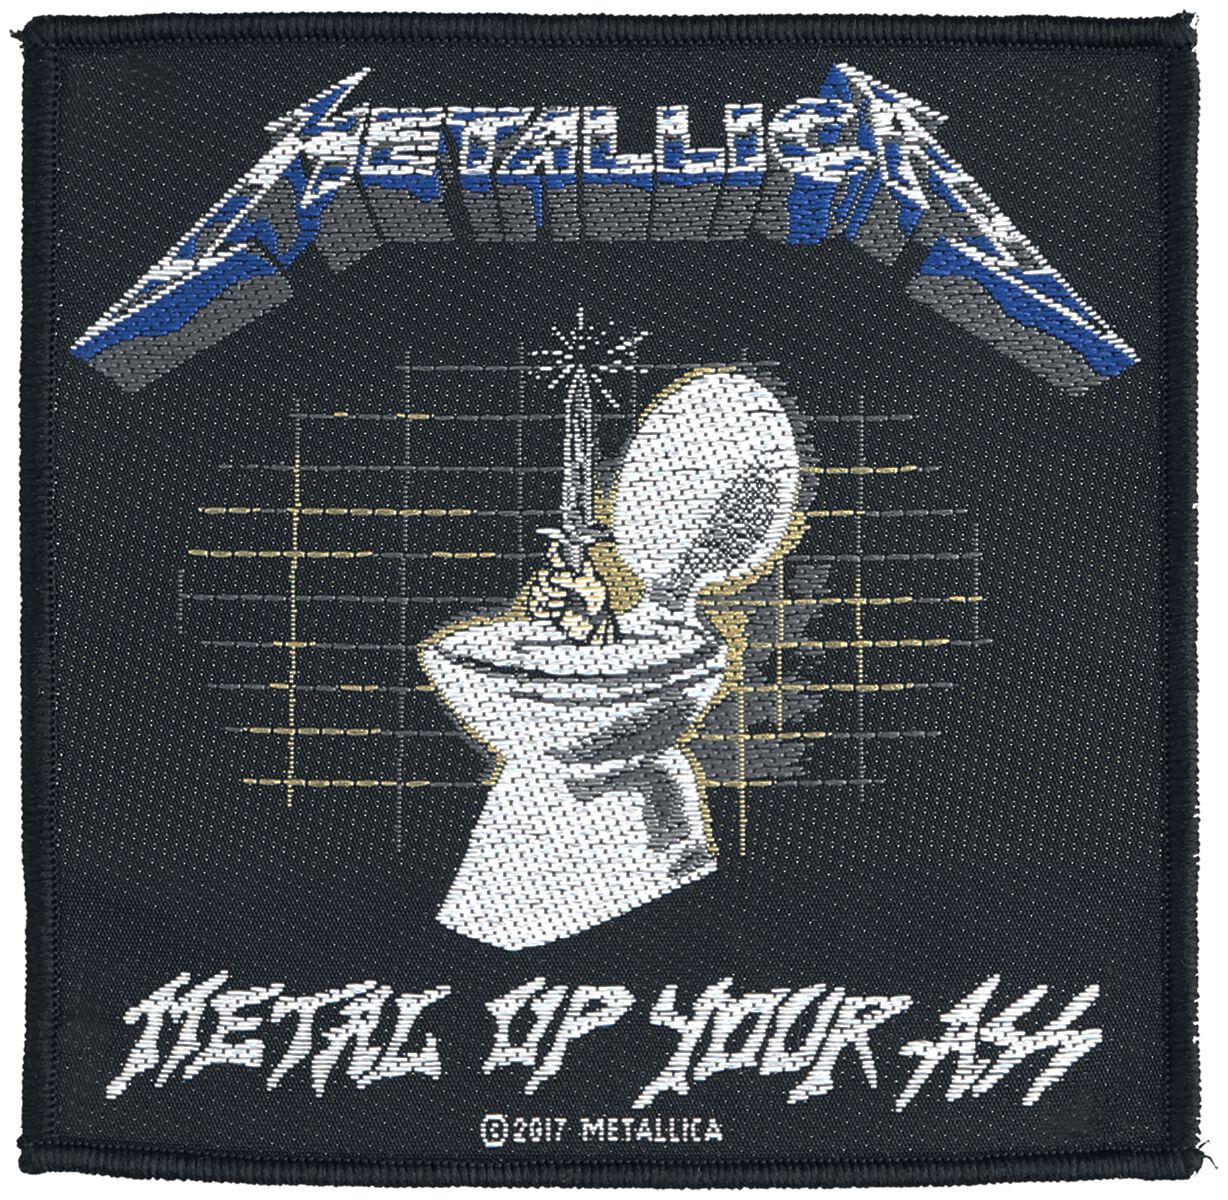 Metallica Patch - Metal Up Your Ass - schwarz/weiß/blau  - Lizenziertes Merchandise!